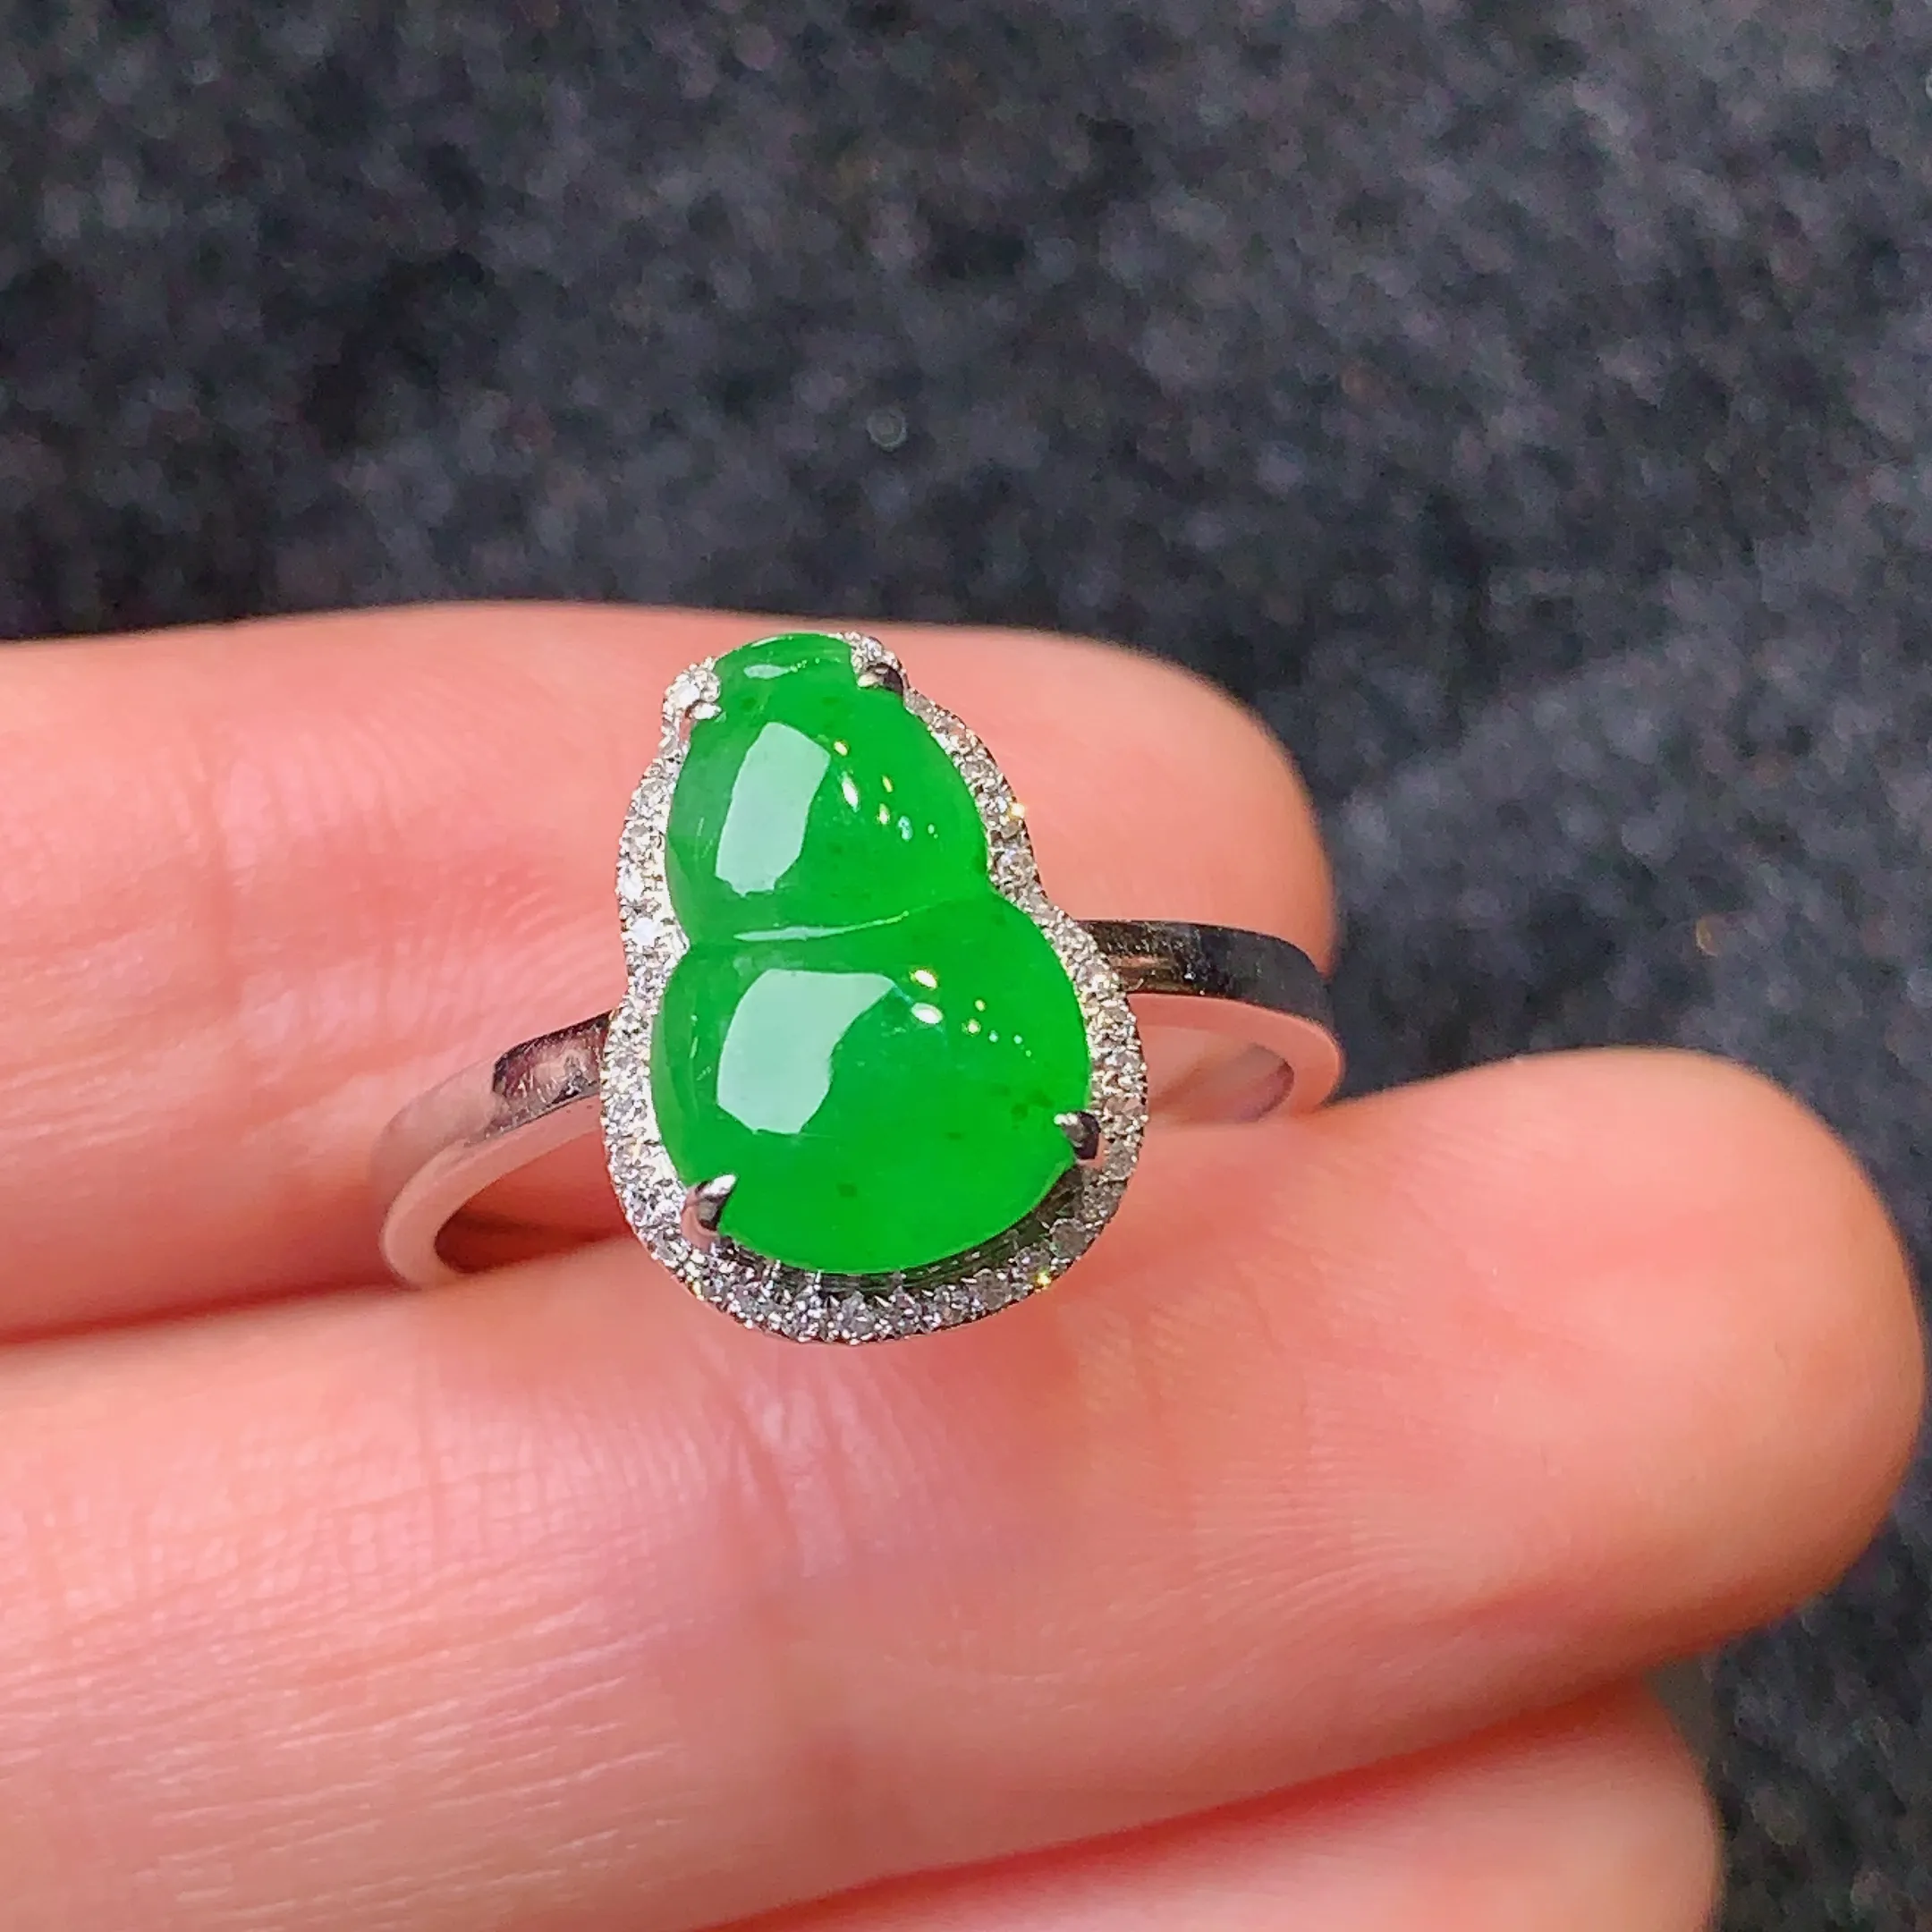 18k金钻镶嵌满绿葫芦戒指 玉质细腻 款式新颖时尚高贵优雅 圈口11.5 整体尺寸13.3*9.8*